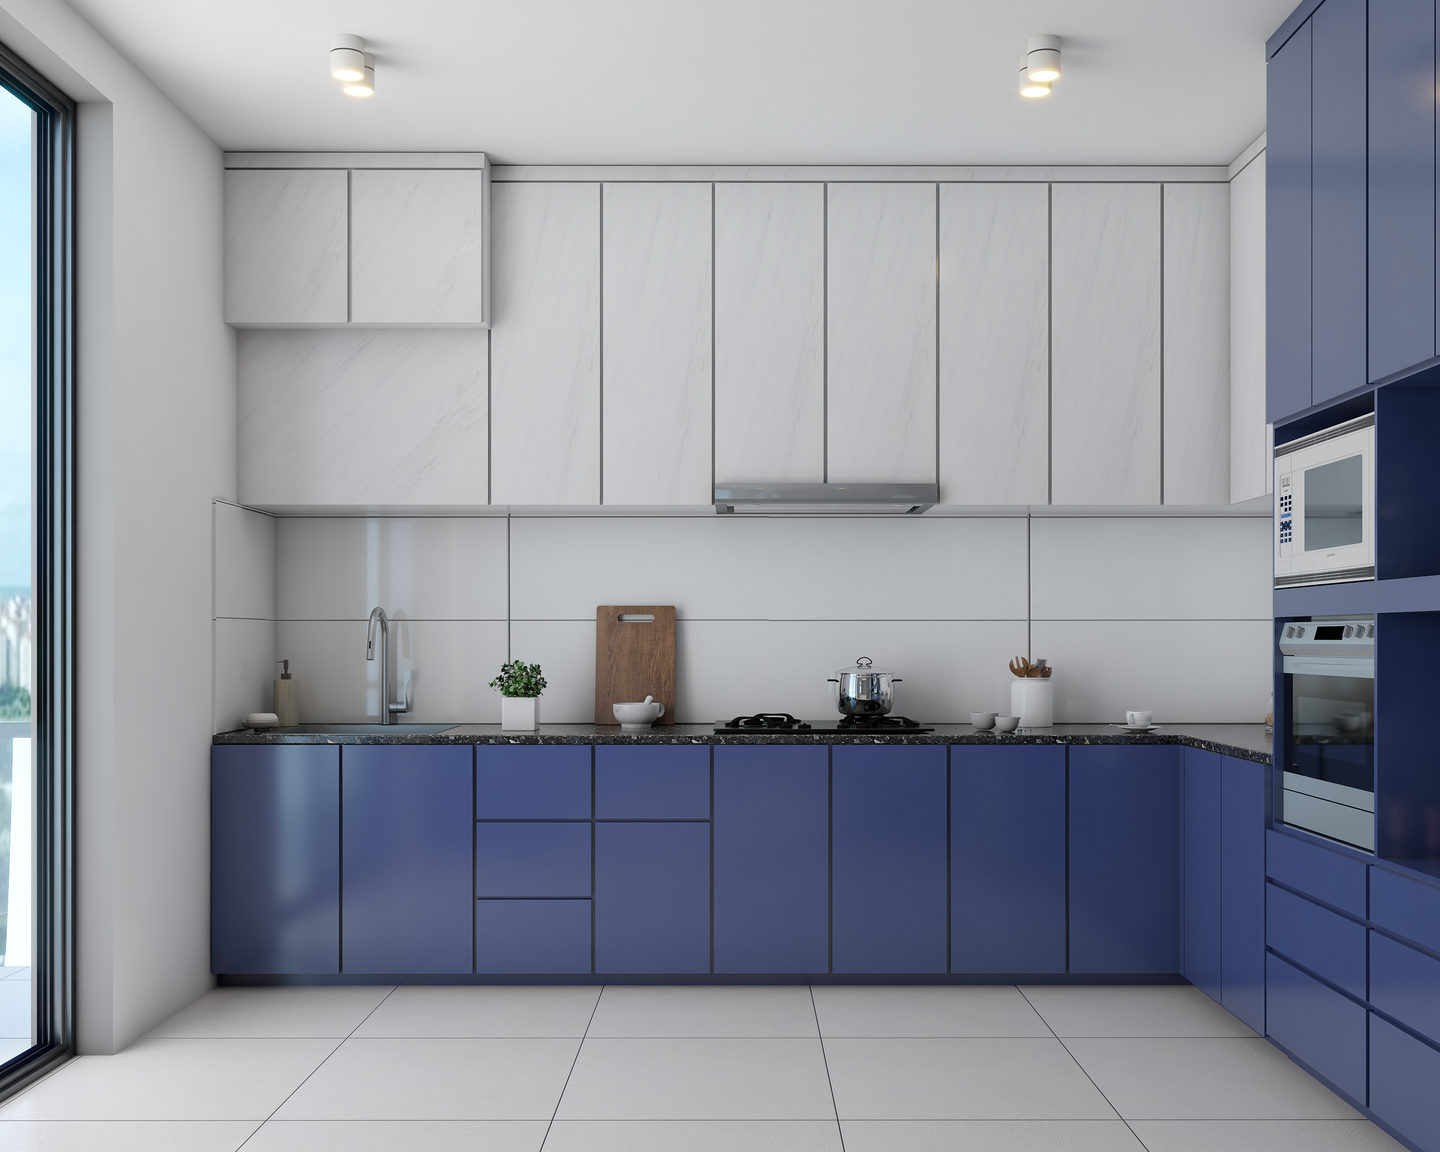 Modern Spacious Kitchen Design with Dark Wood Cabinets and Sliding Door - Livspace